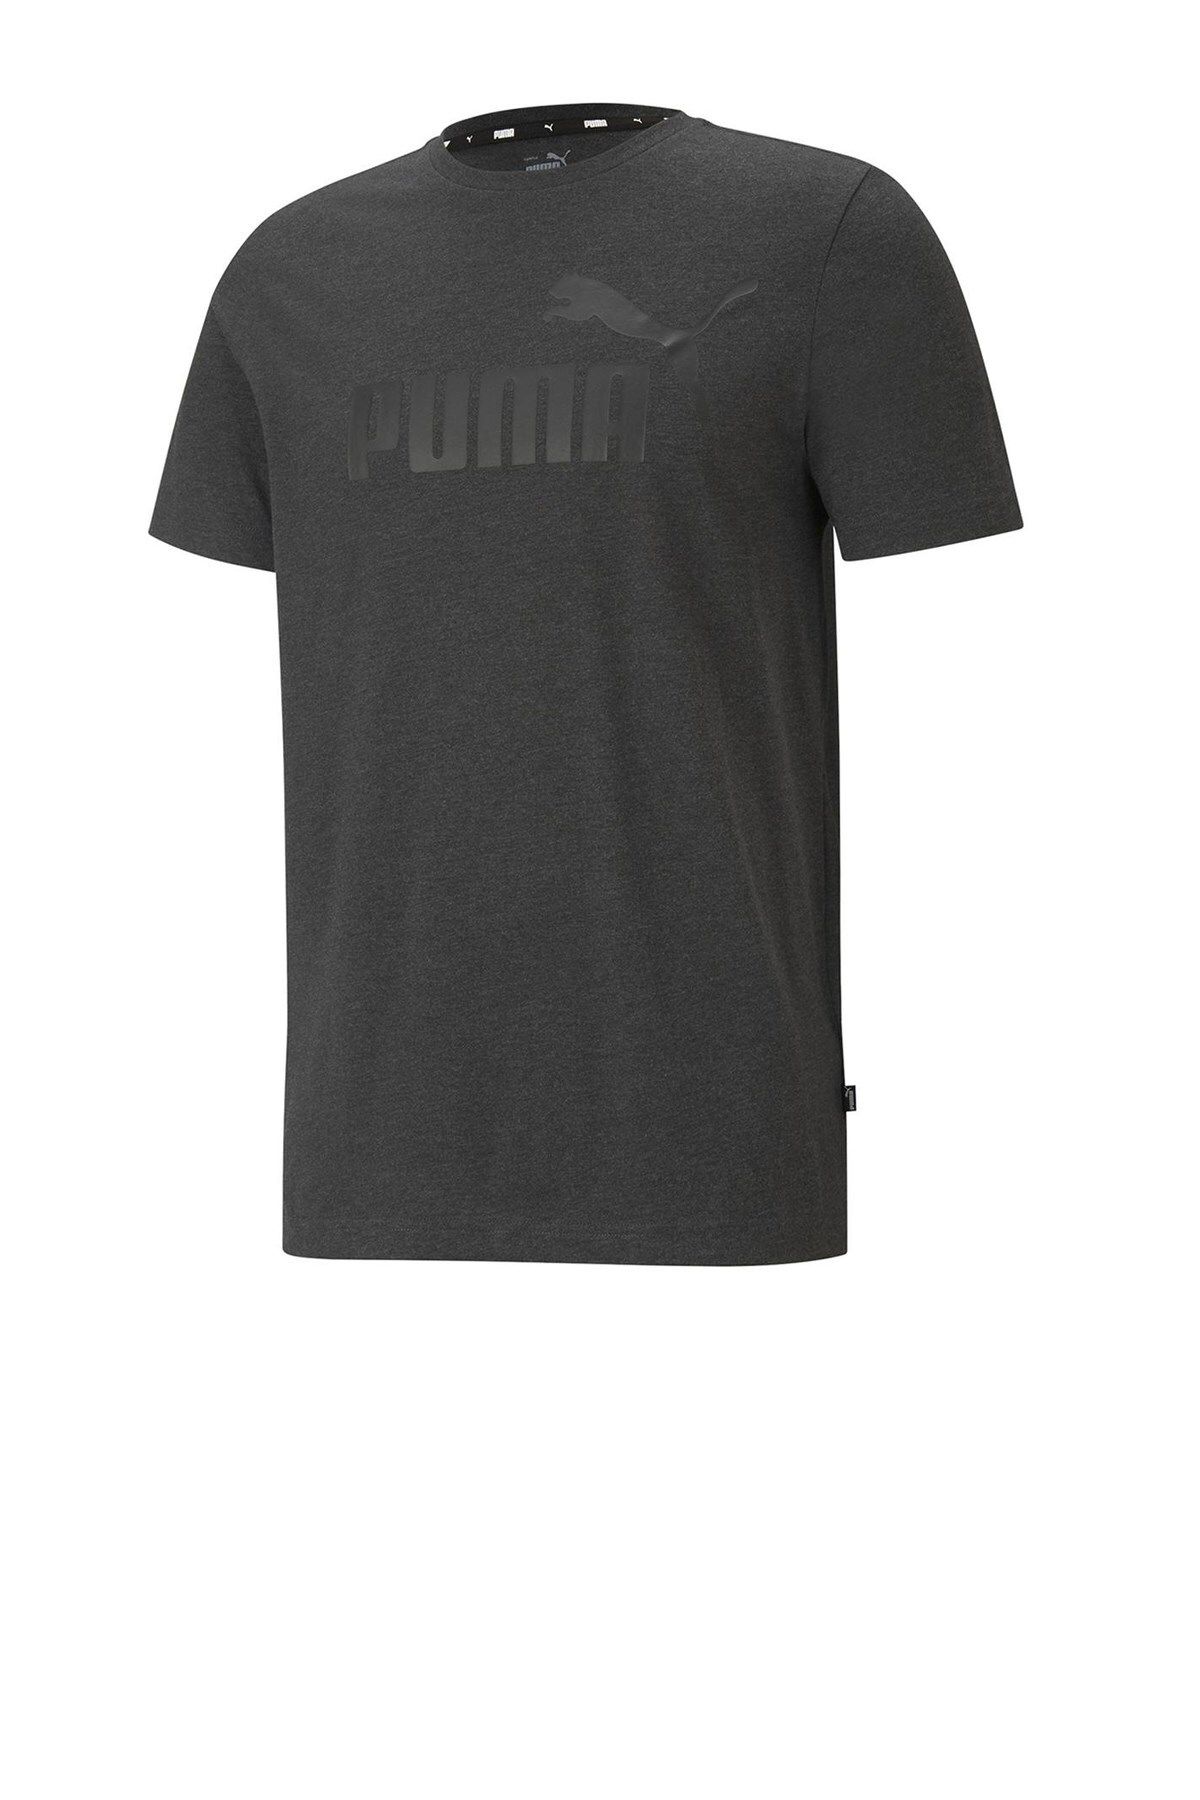 Puma Ess Heather Men\'s T-Shirt 58673607 - Trendyol